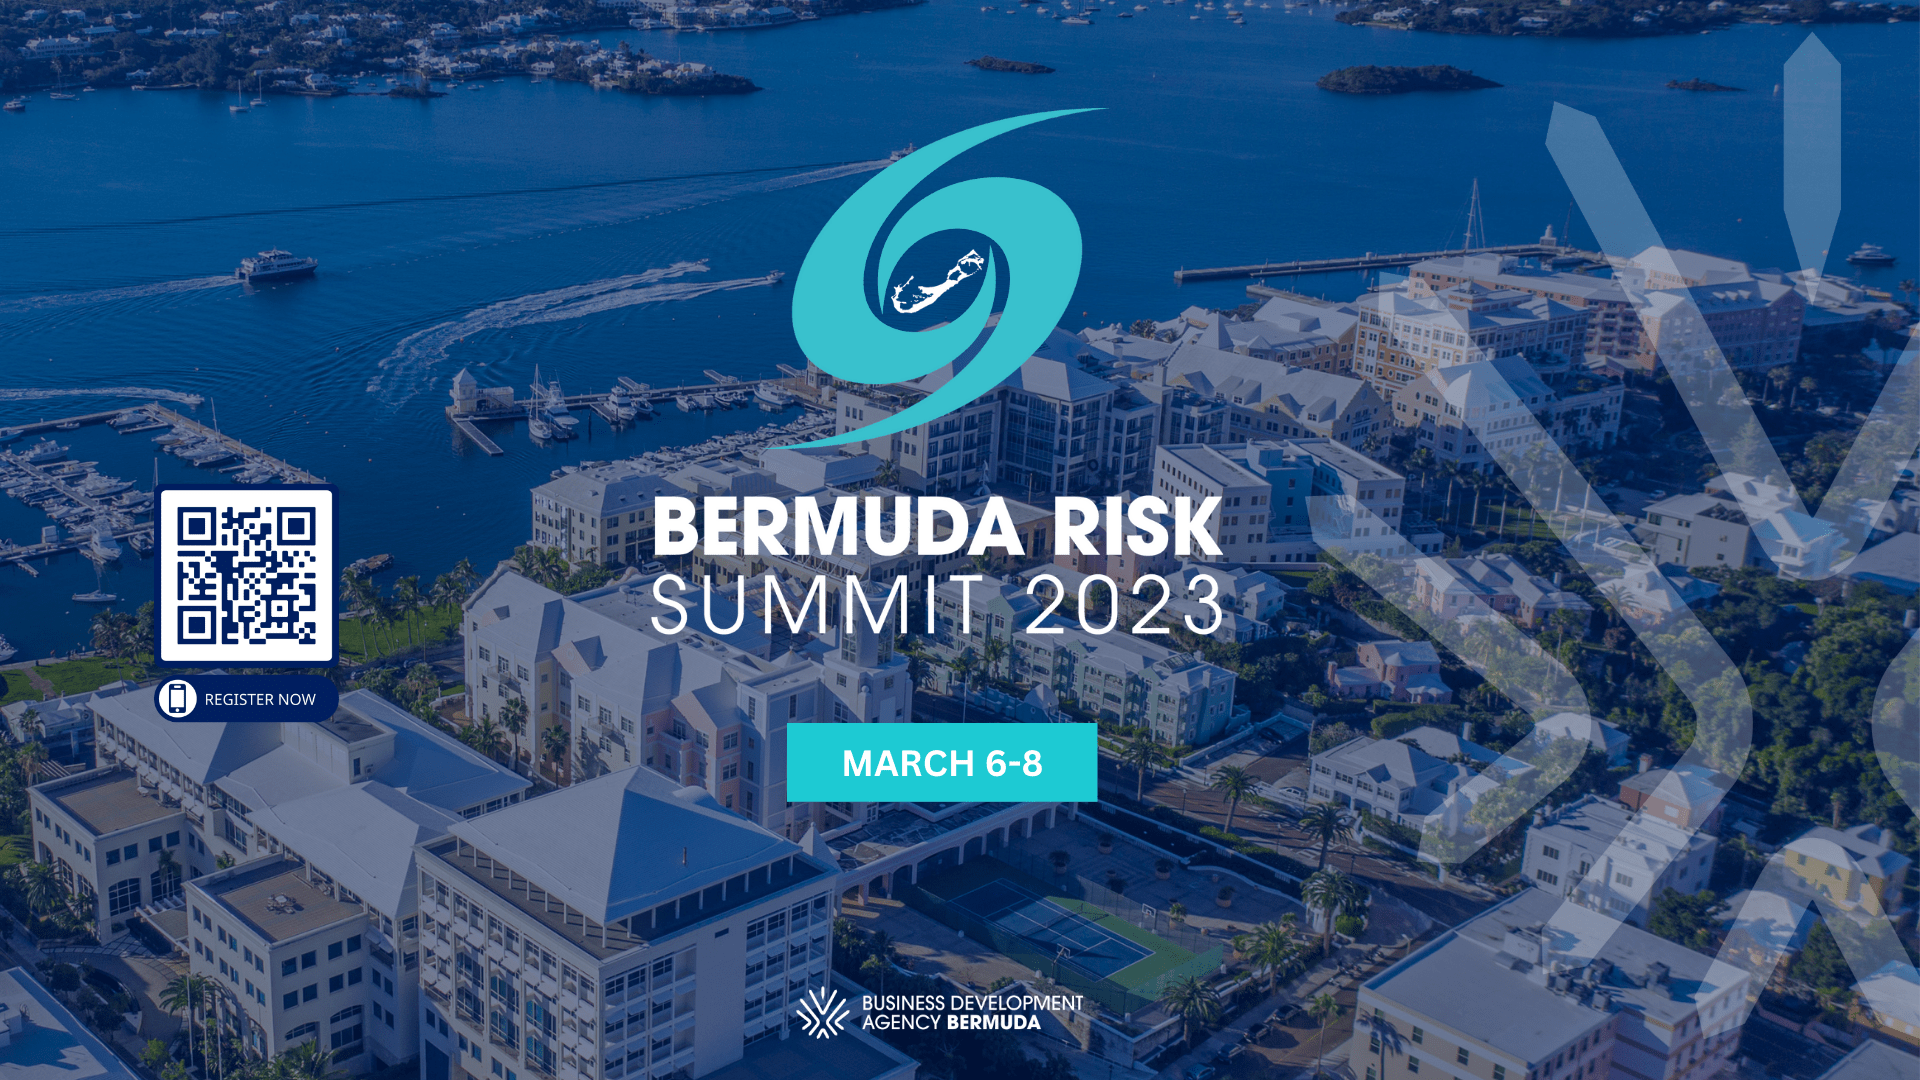 DEI Trailblazers to Be Honoured at Bermuda Risk Summit